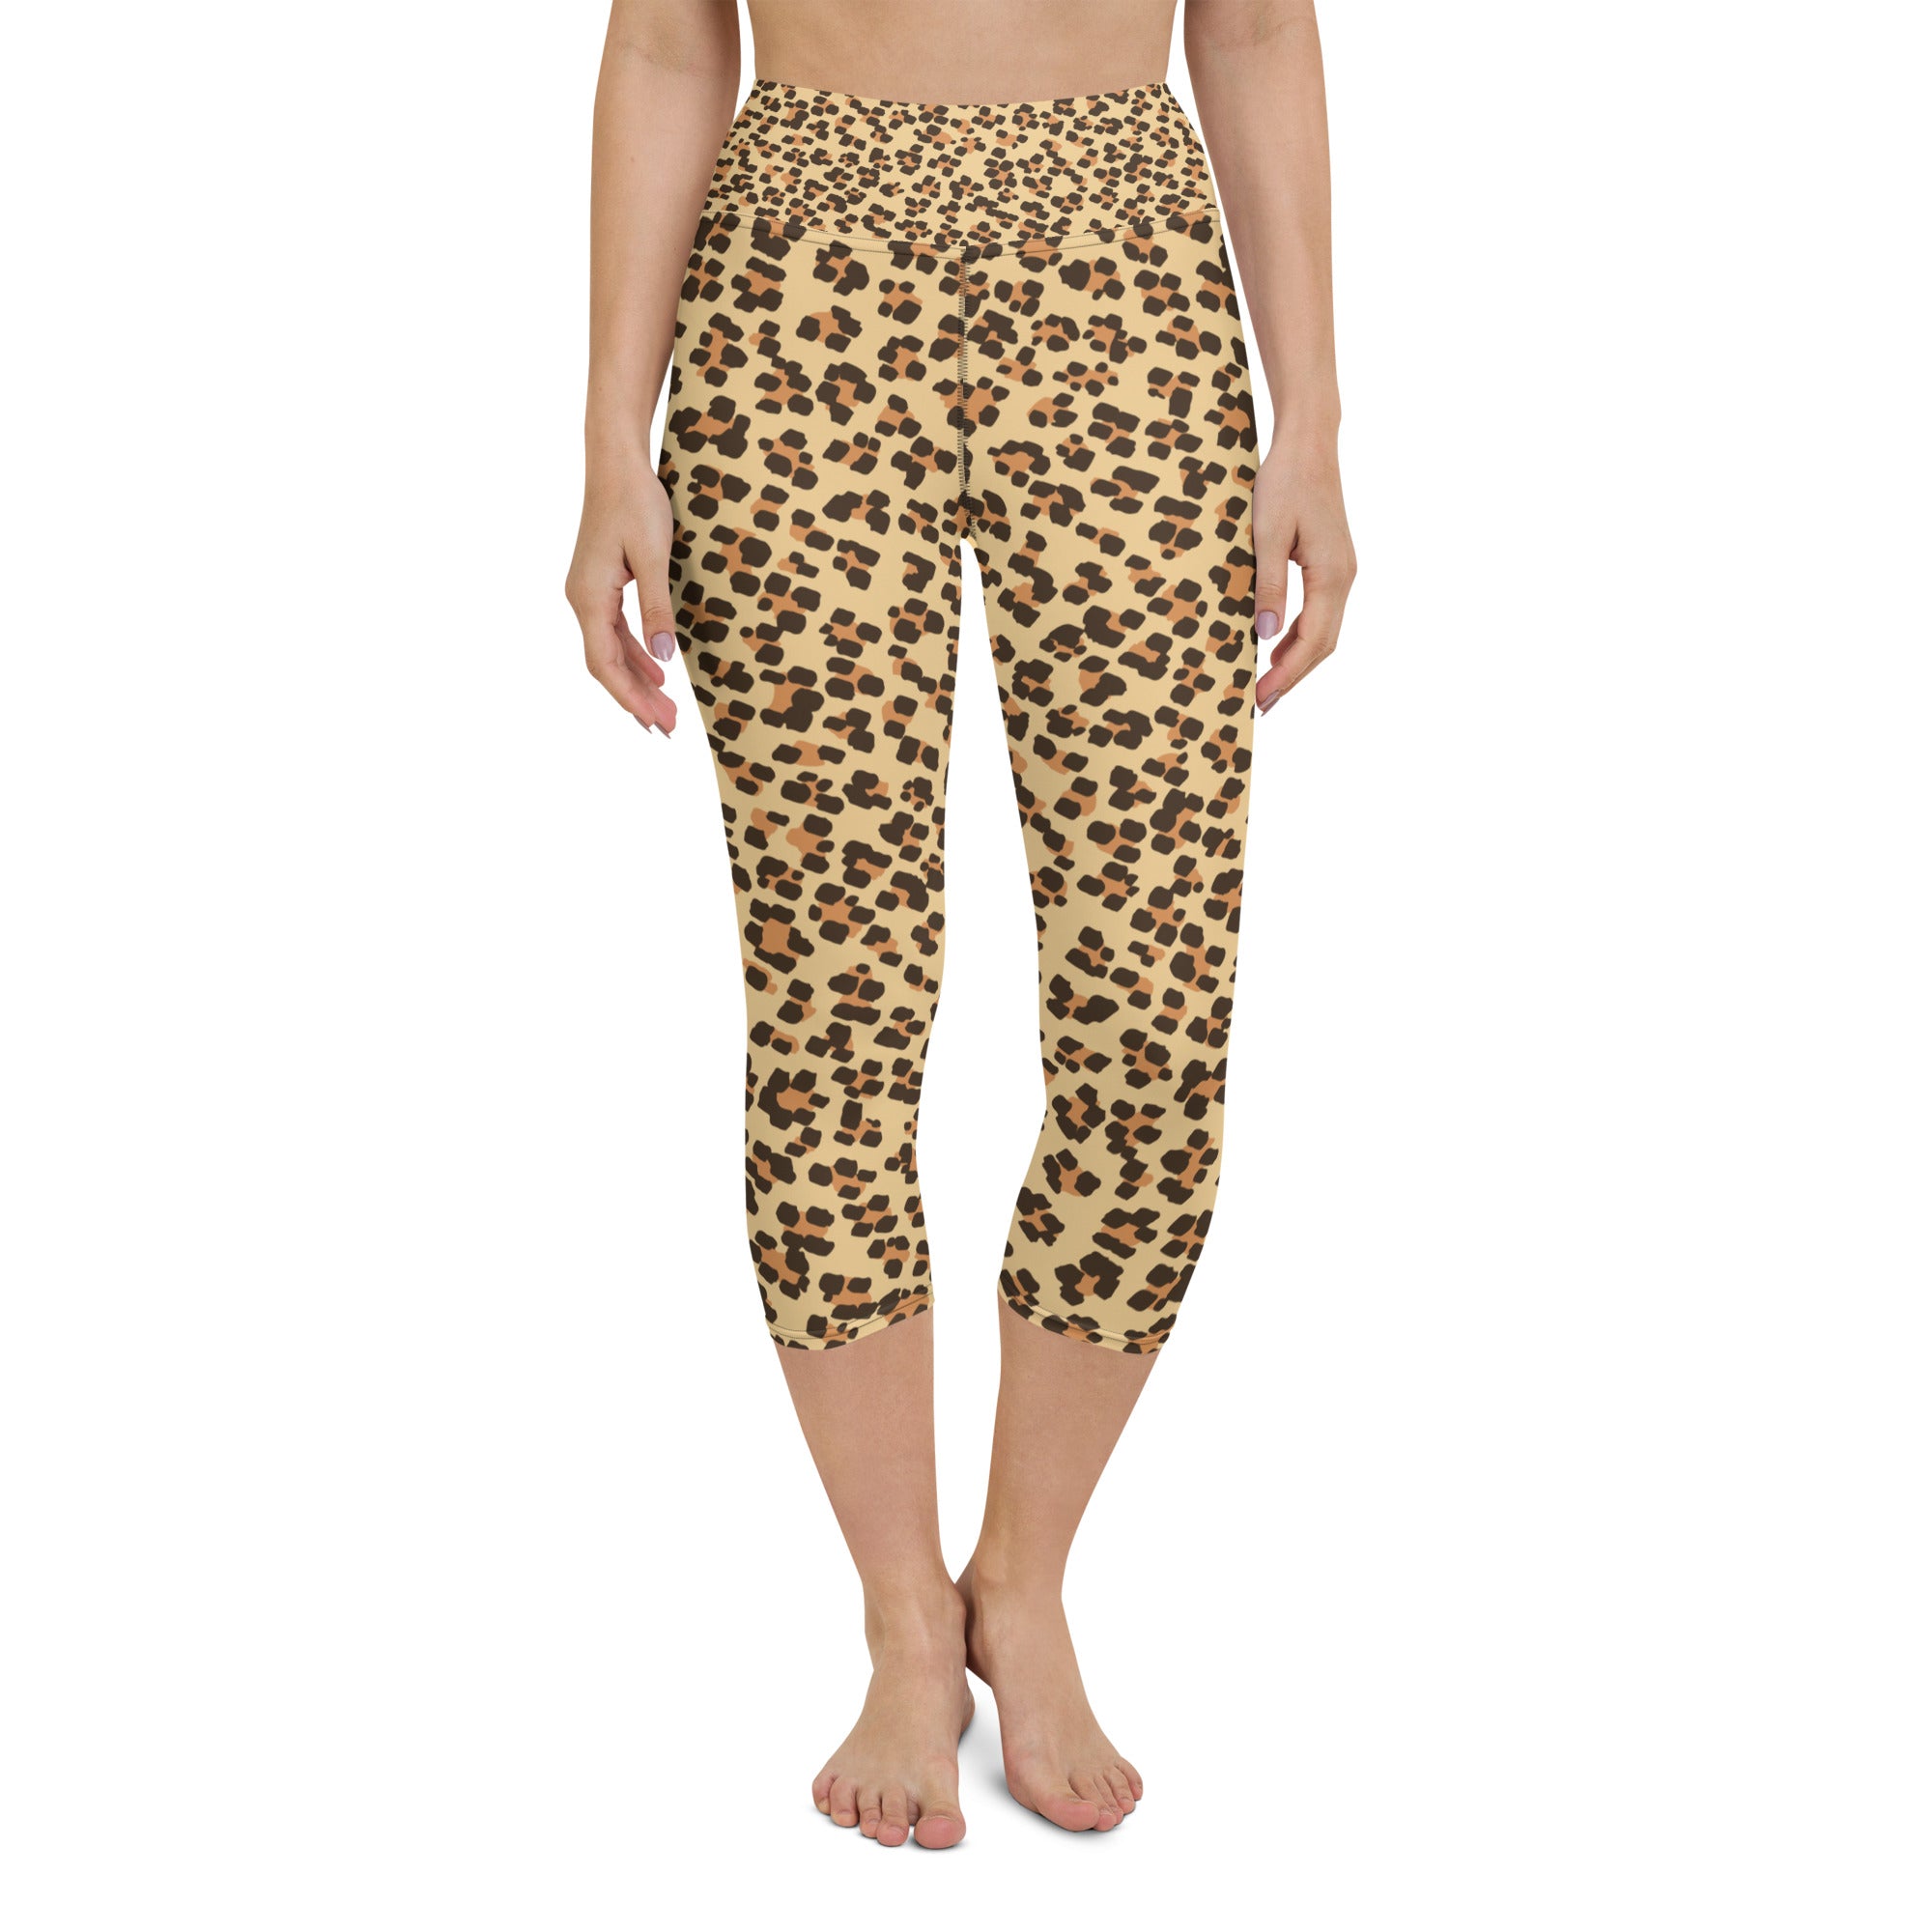 Leopard Yoga Capri Leggings